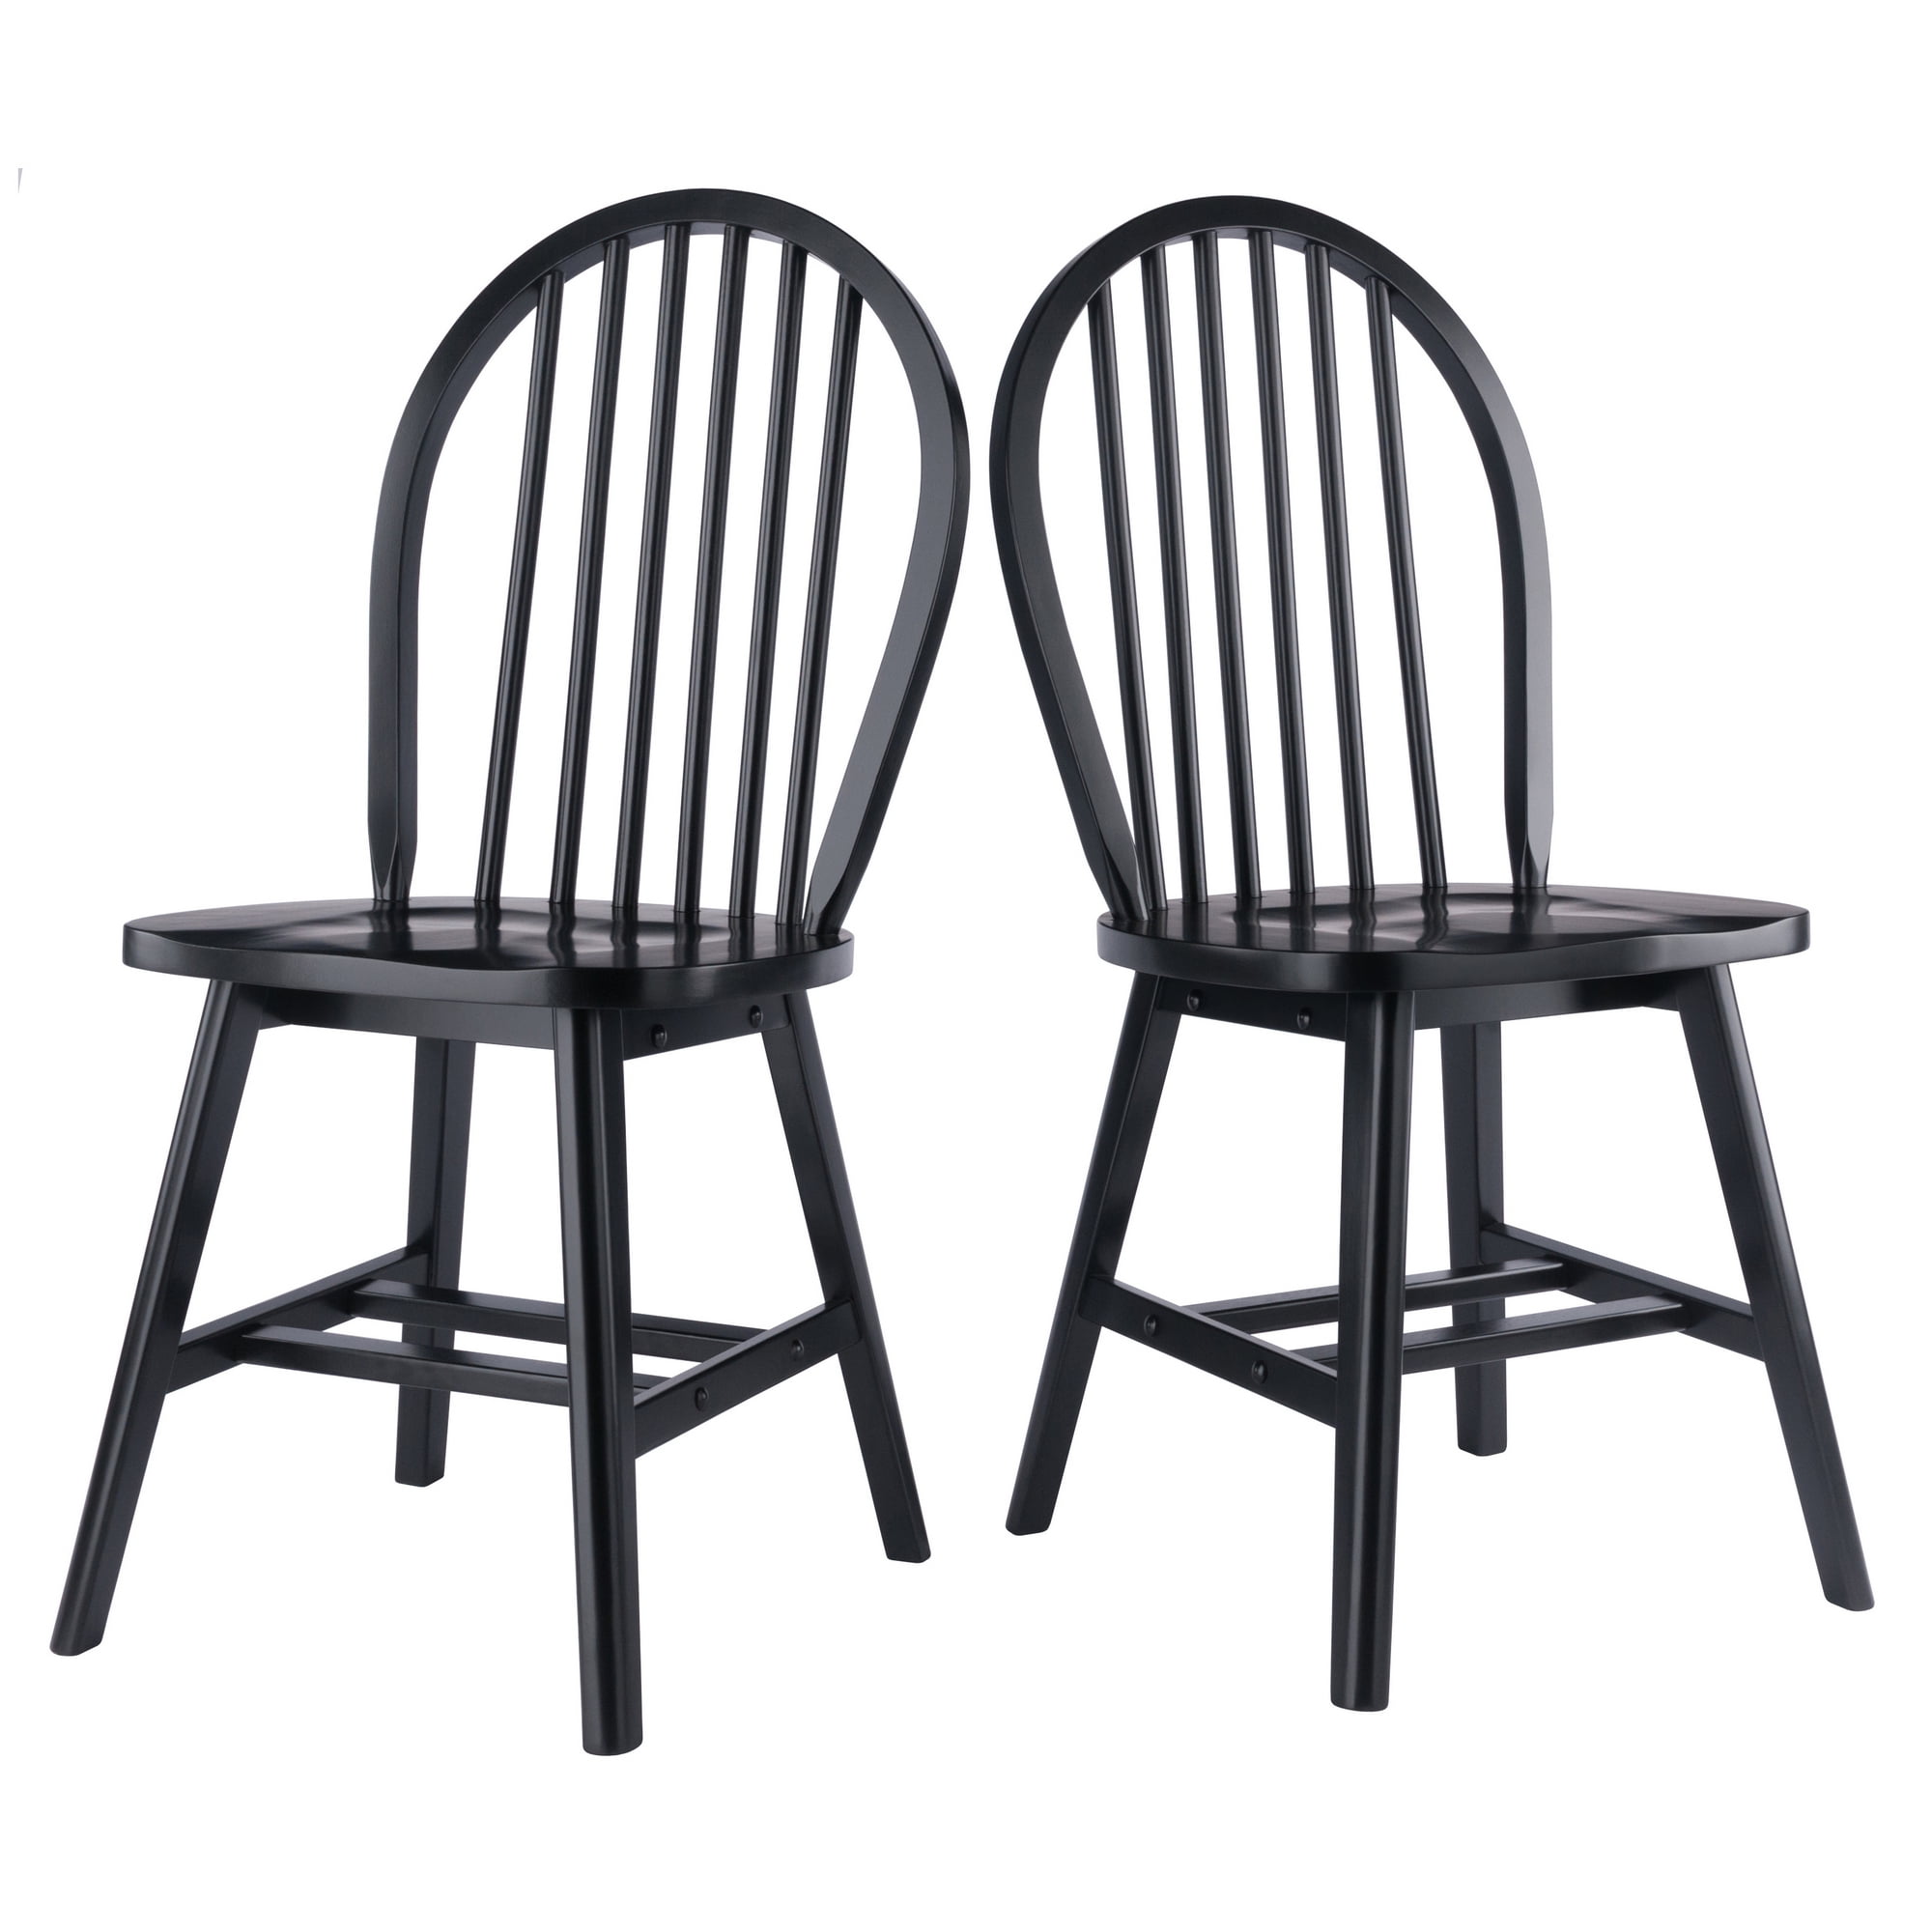 Winsome Wood Windsor 2-Pc Chair Set, Black Finish Promo